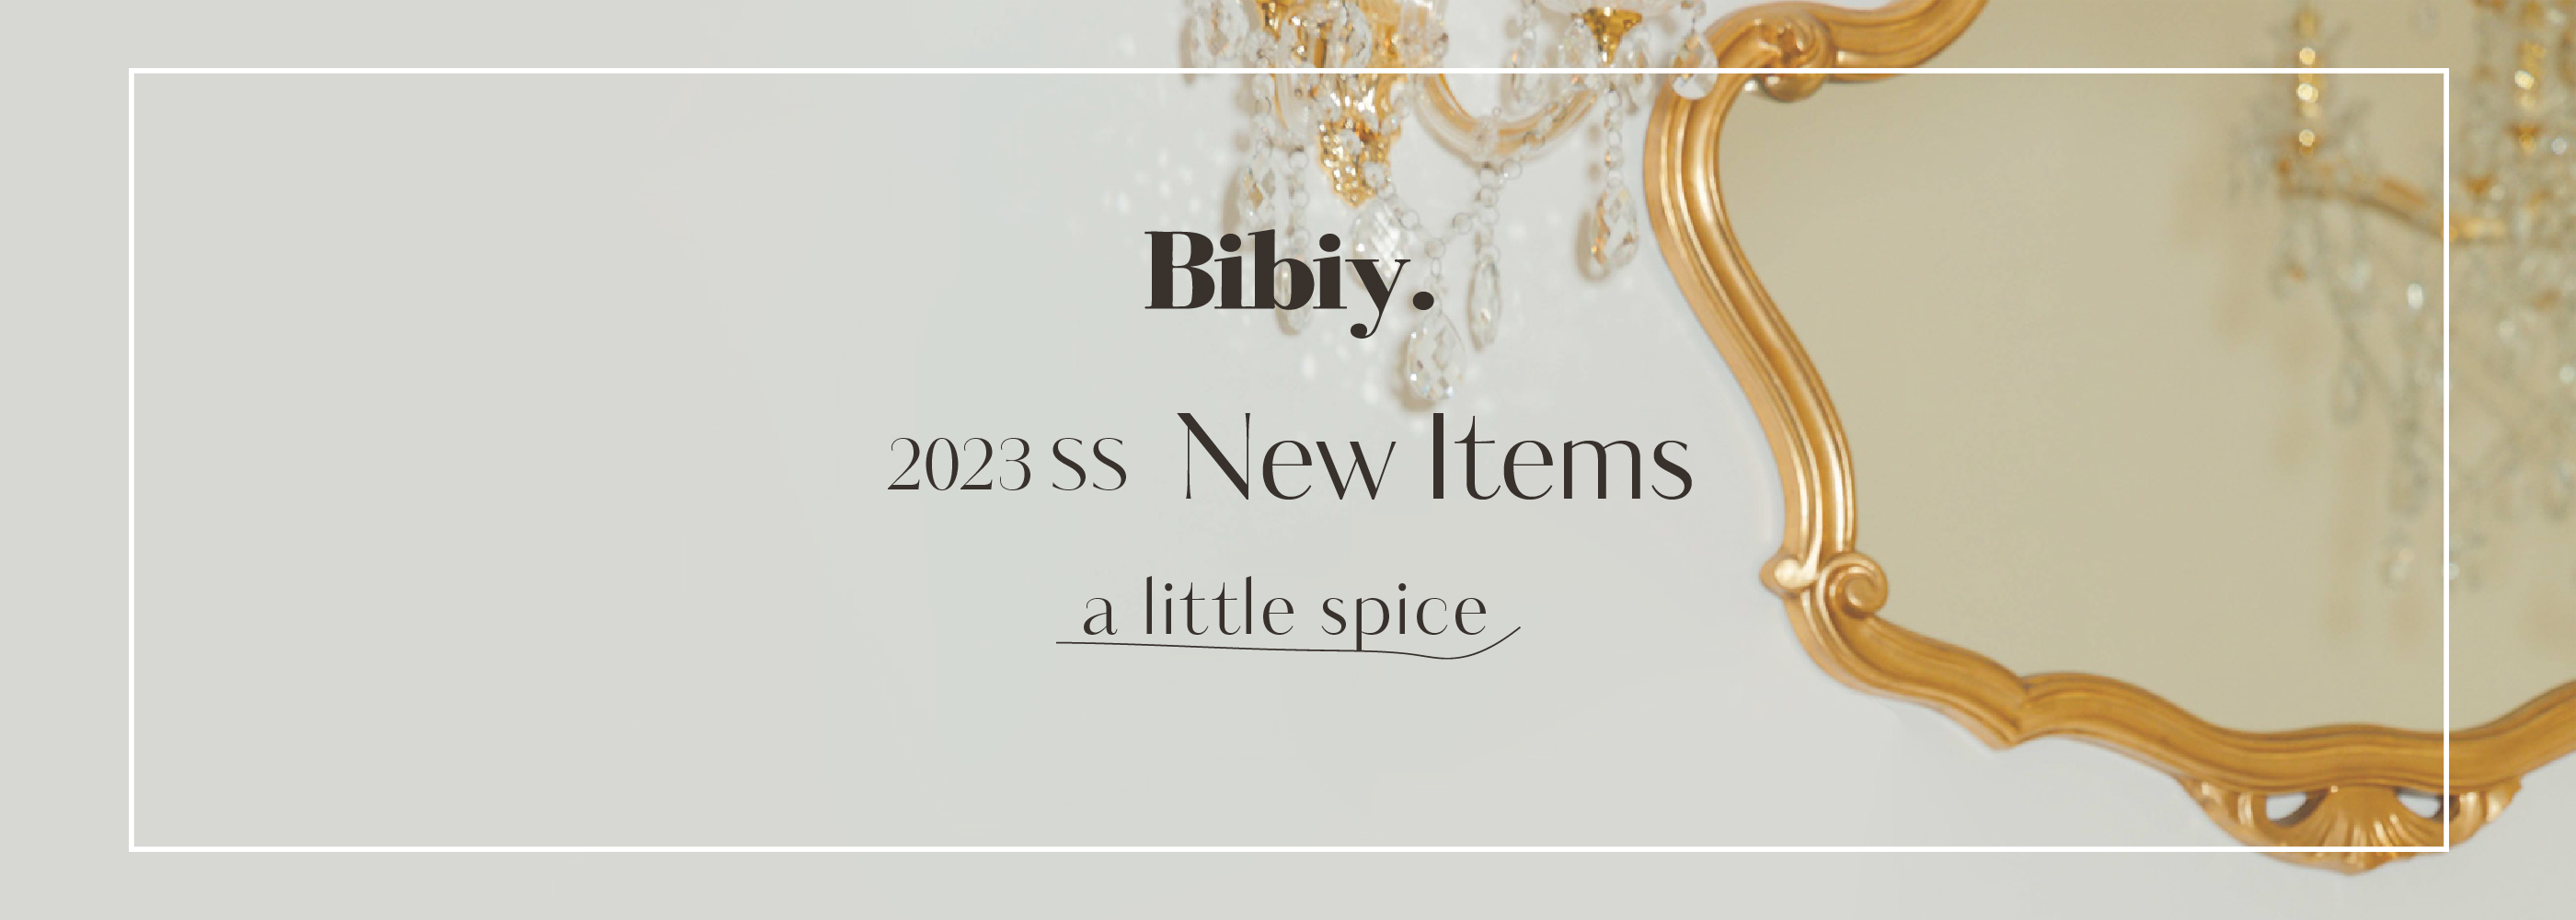 Bibiy. 2023SS New Items a little spice